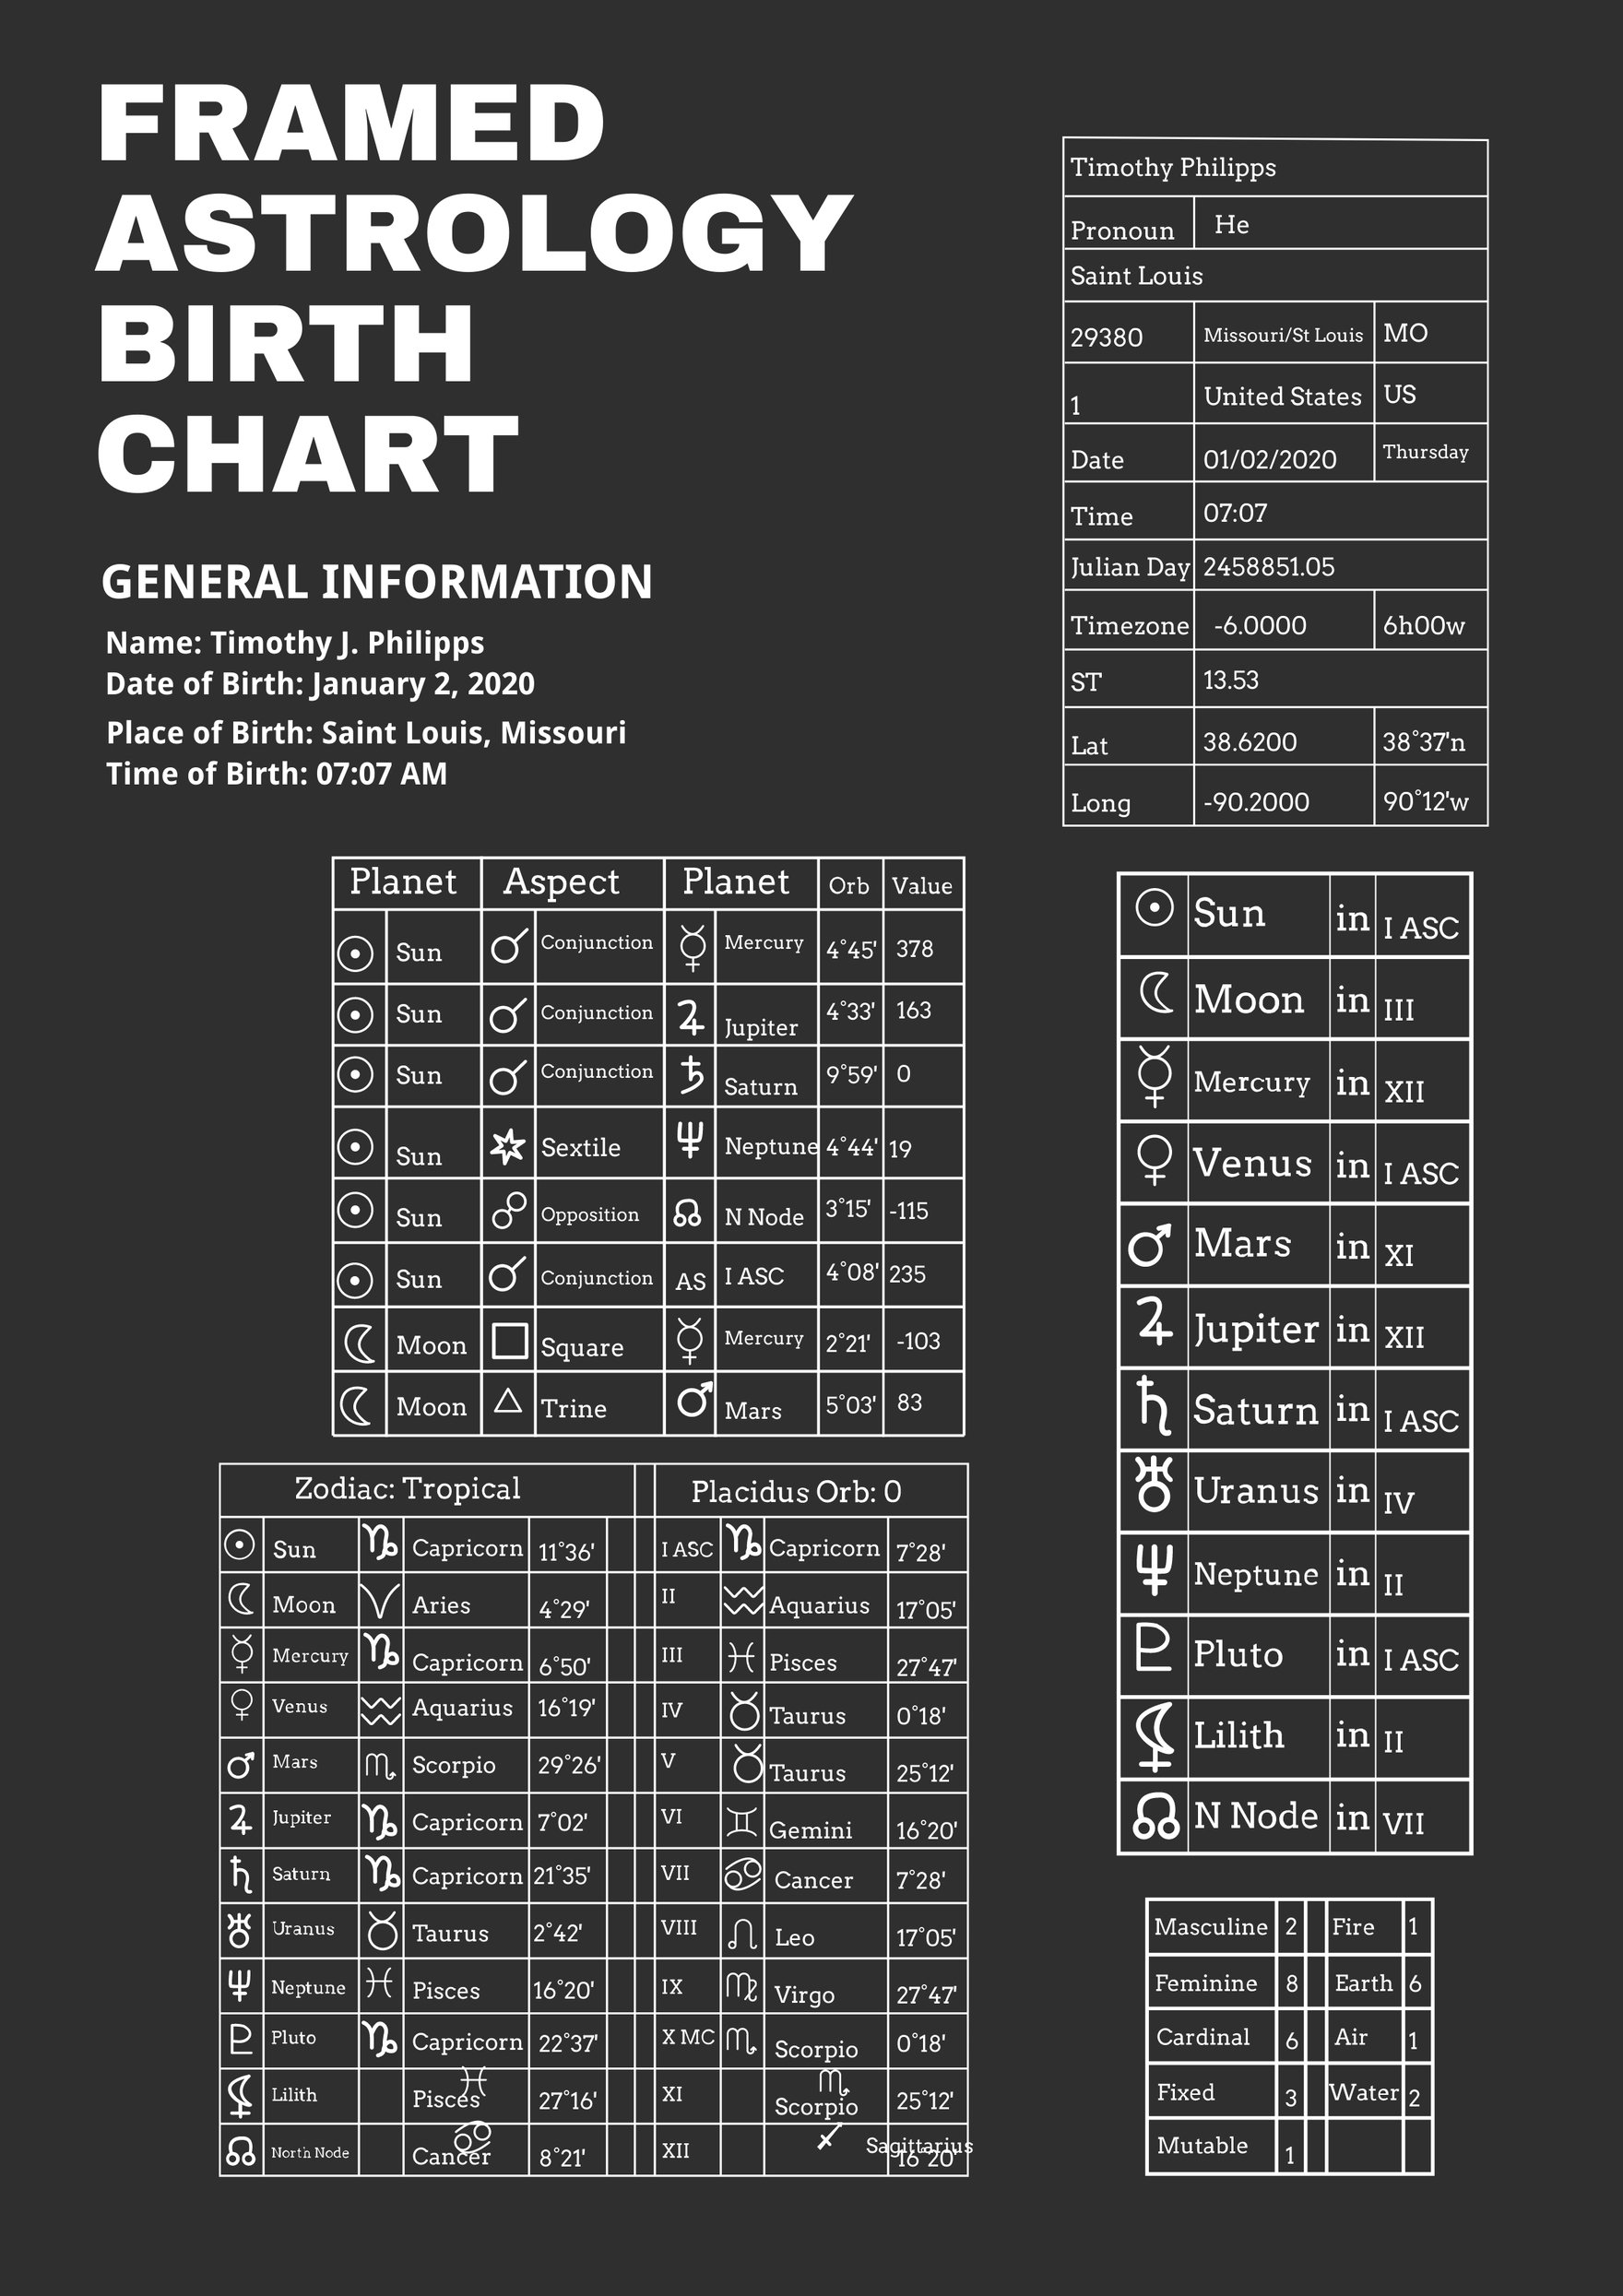 Framed Astrology Birth Chart Template in PDF, Illustrator